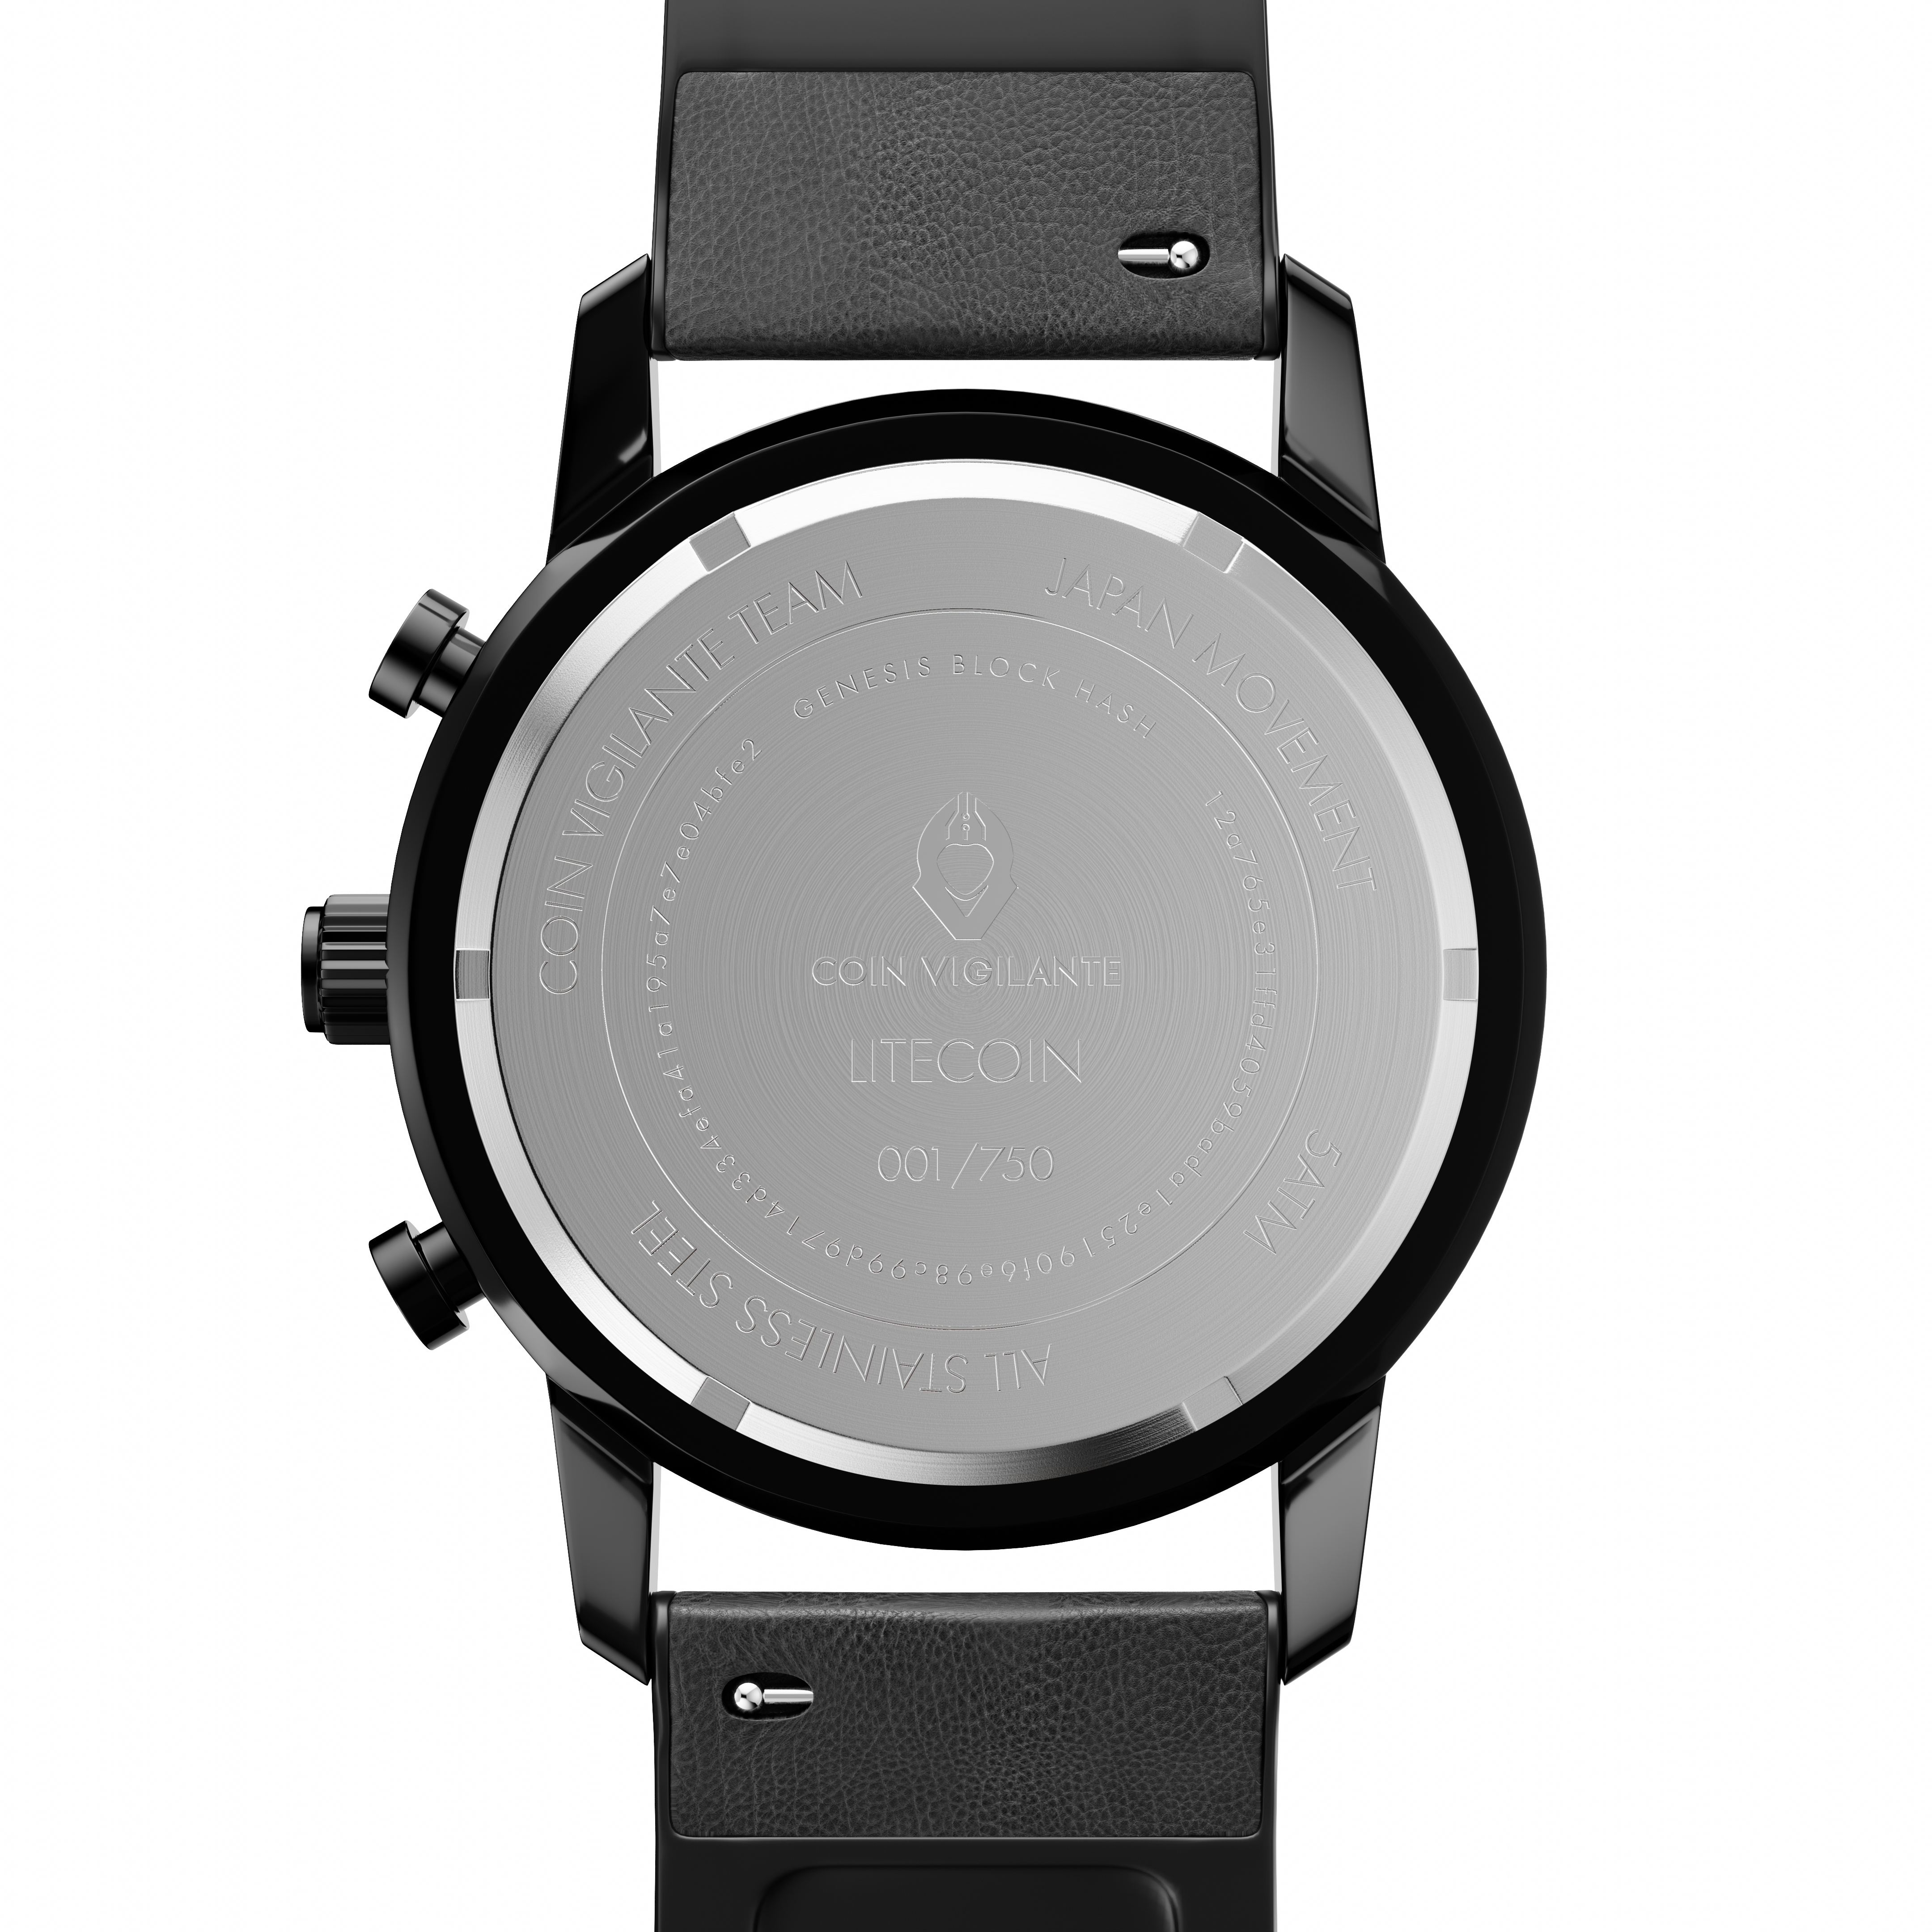 Litecoin Watch - Model G